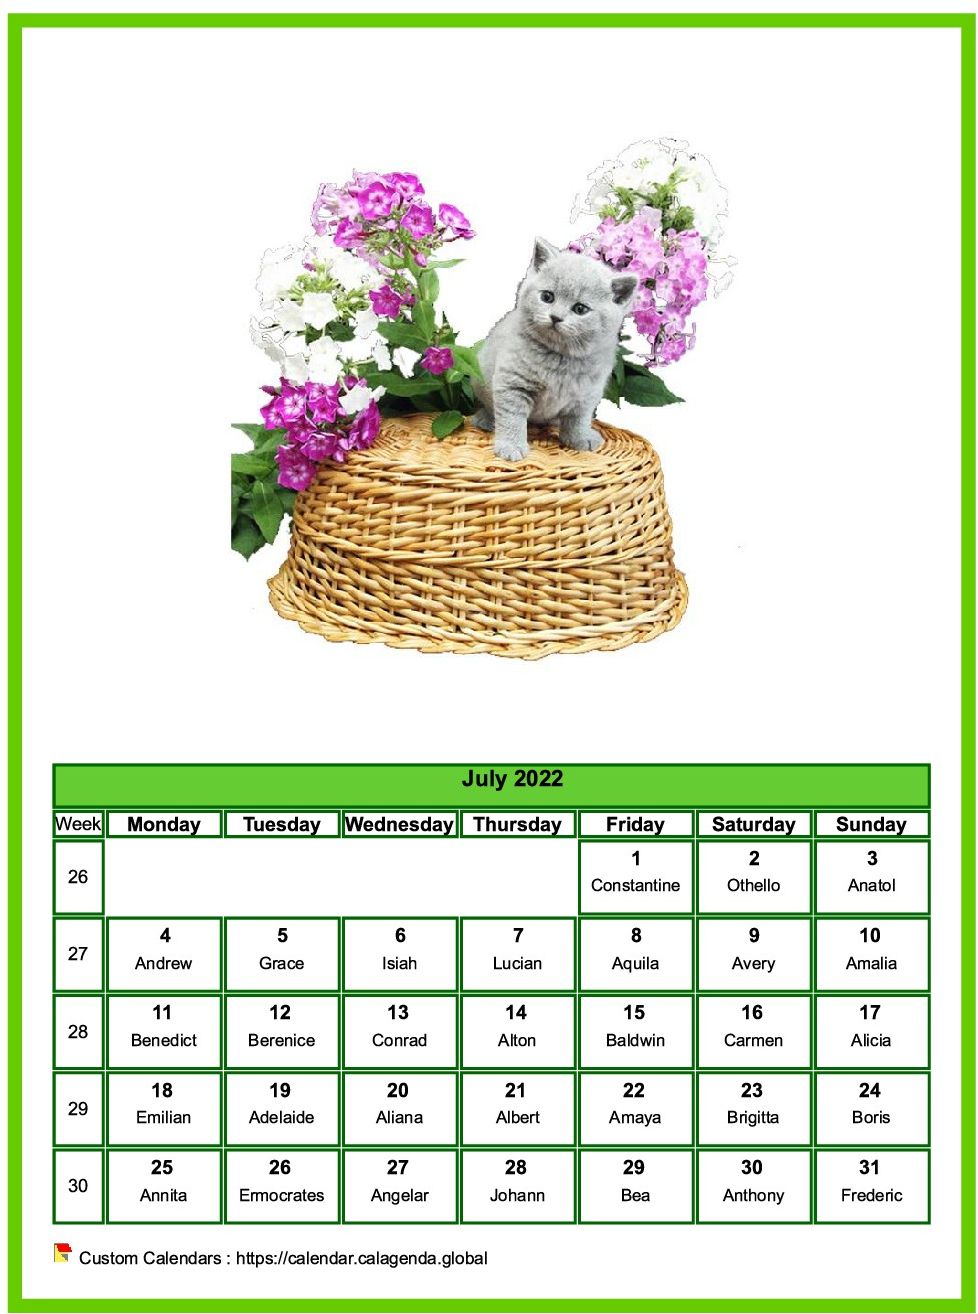 Calendar July 2022 cats